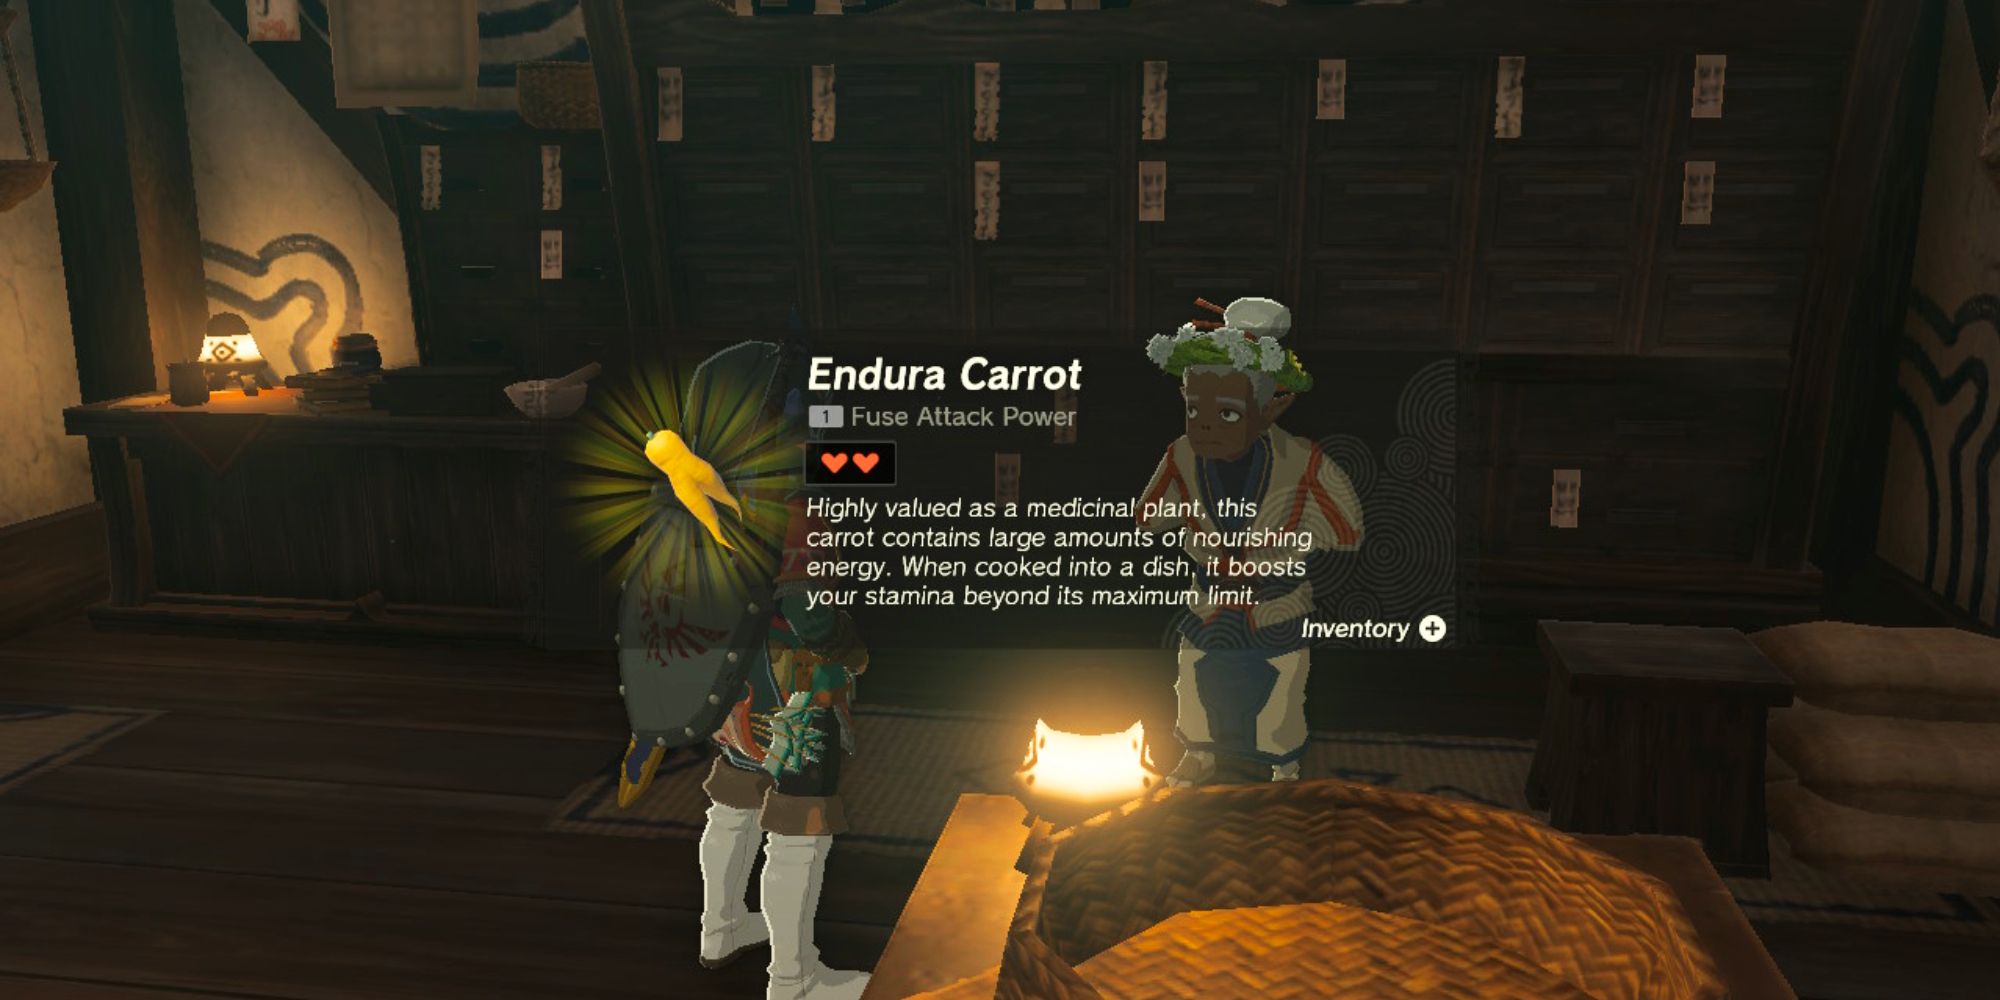 Link's reward for the Codger's Quarrel quest is an Endura carrot.